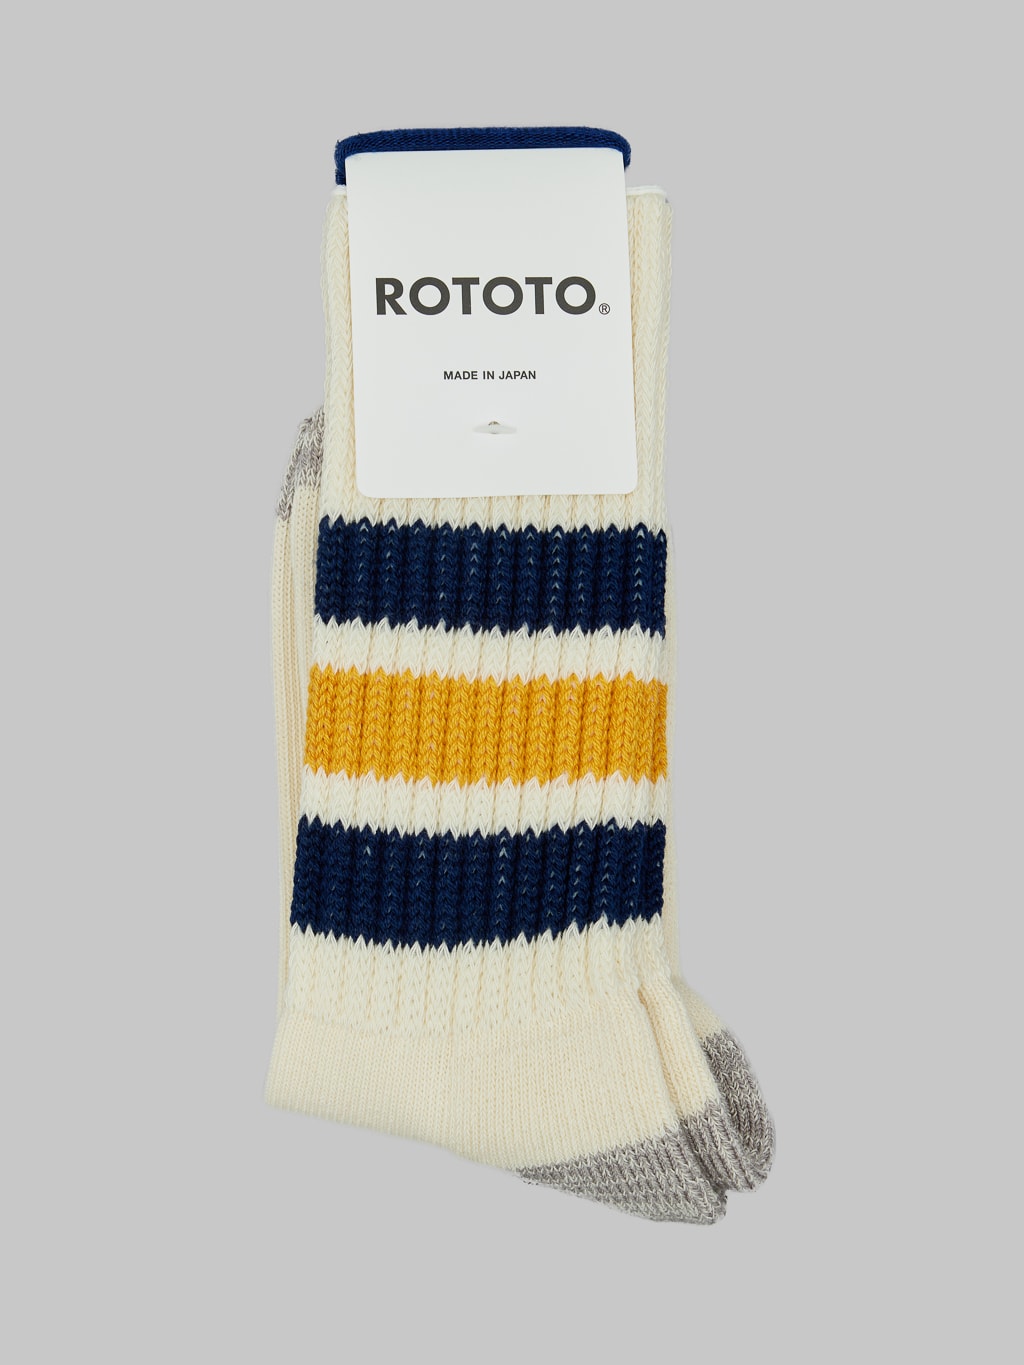 rototo coarse ribbed oldschool crew socks navy yellow japan made